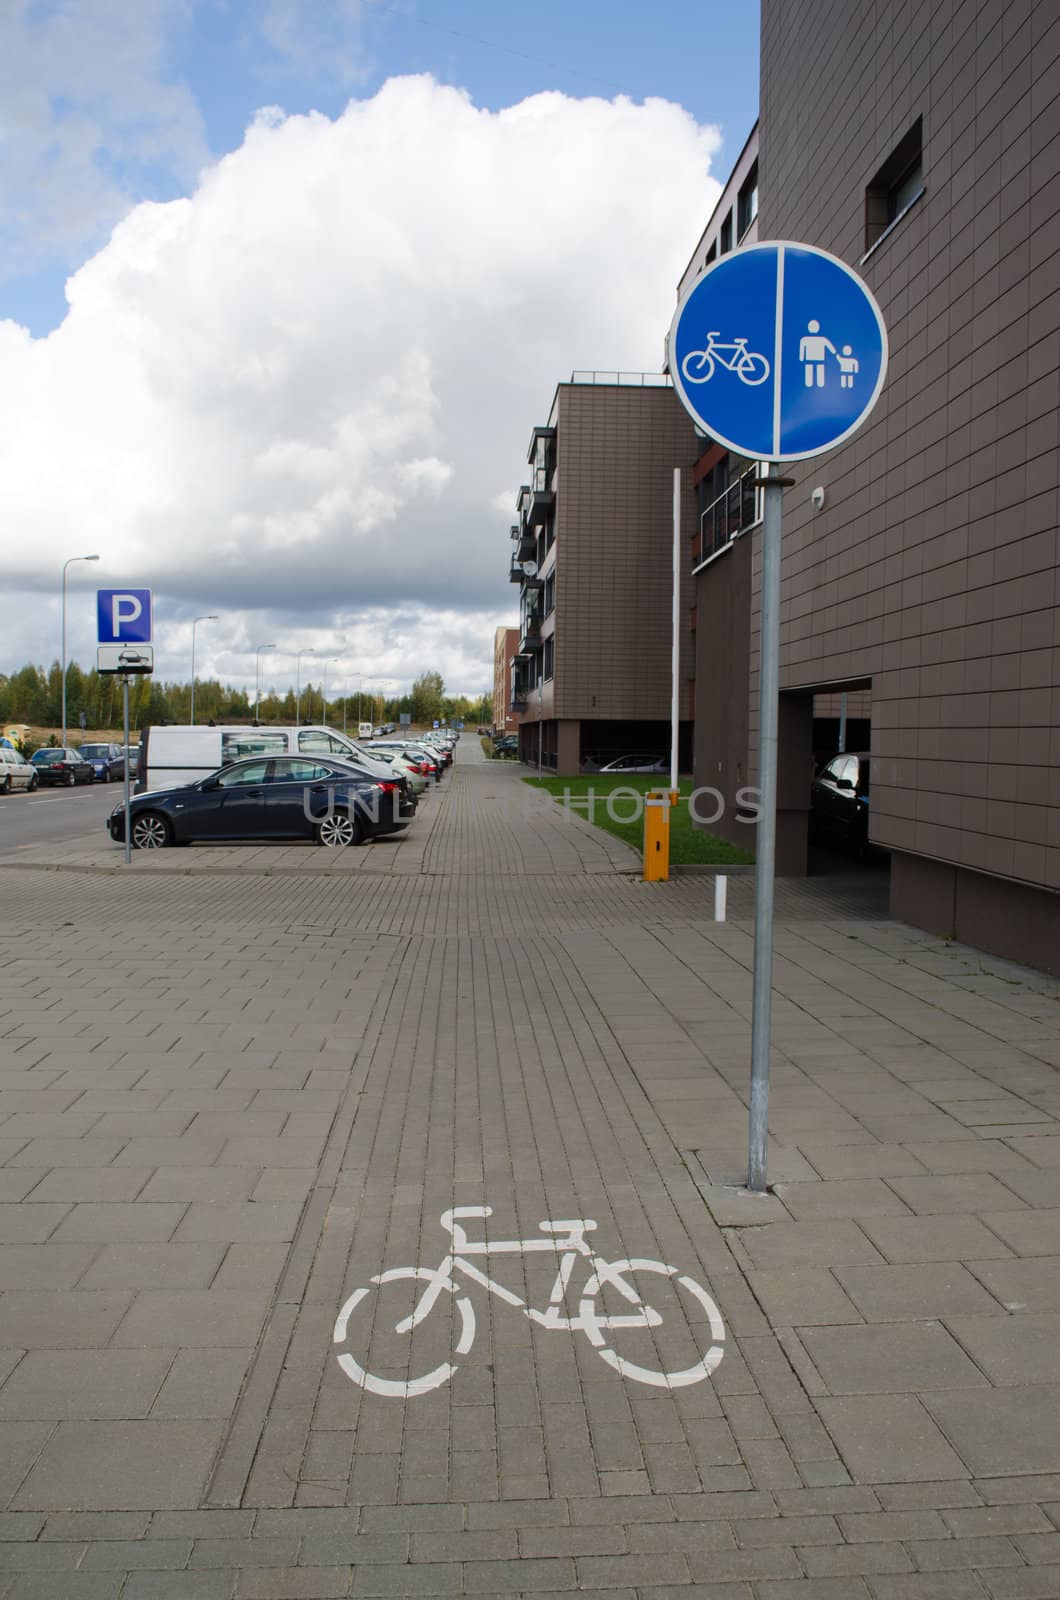 pedestrian footpath walkway bicycle way signs between modern new flat block houses and cars in parking.